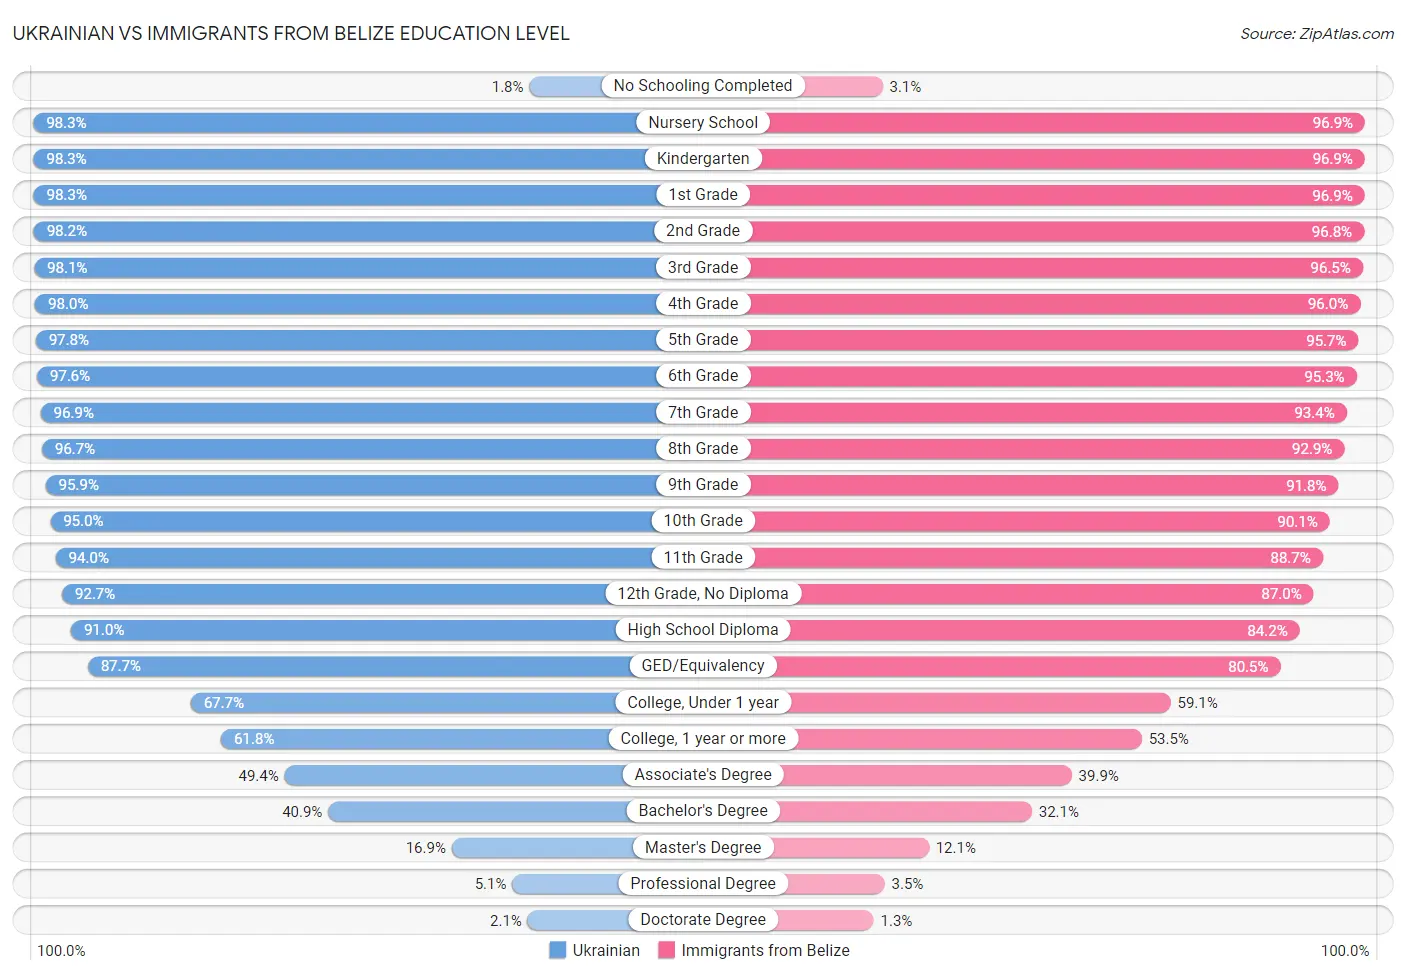 Ukrainian vs Immigrants from Belize Education Level